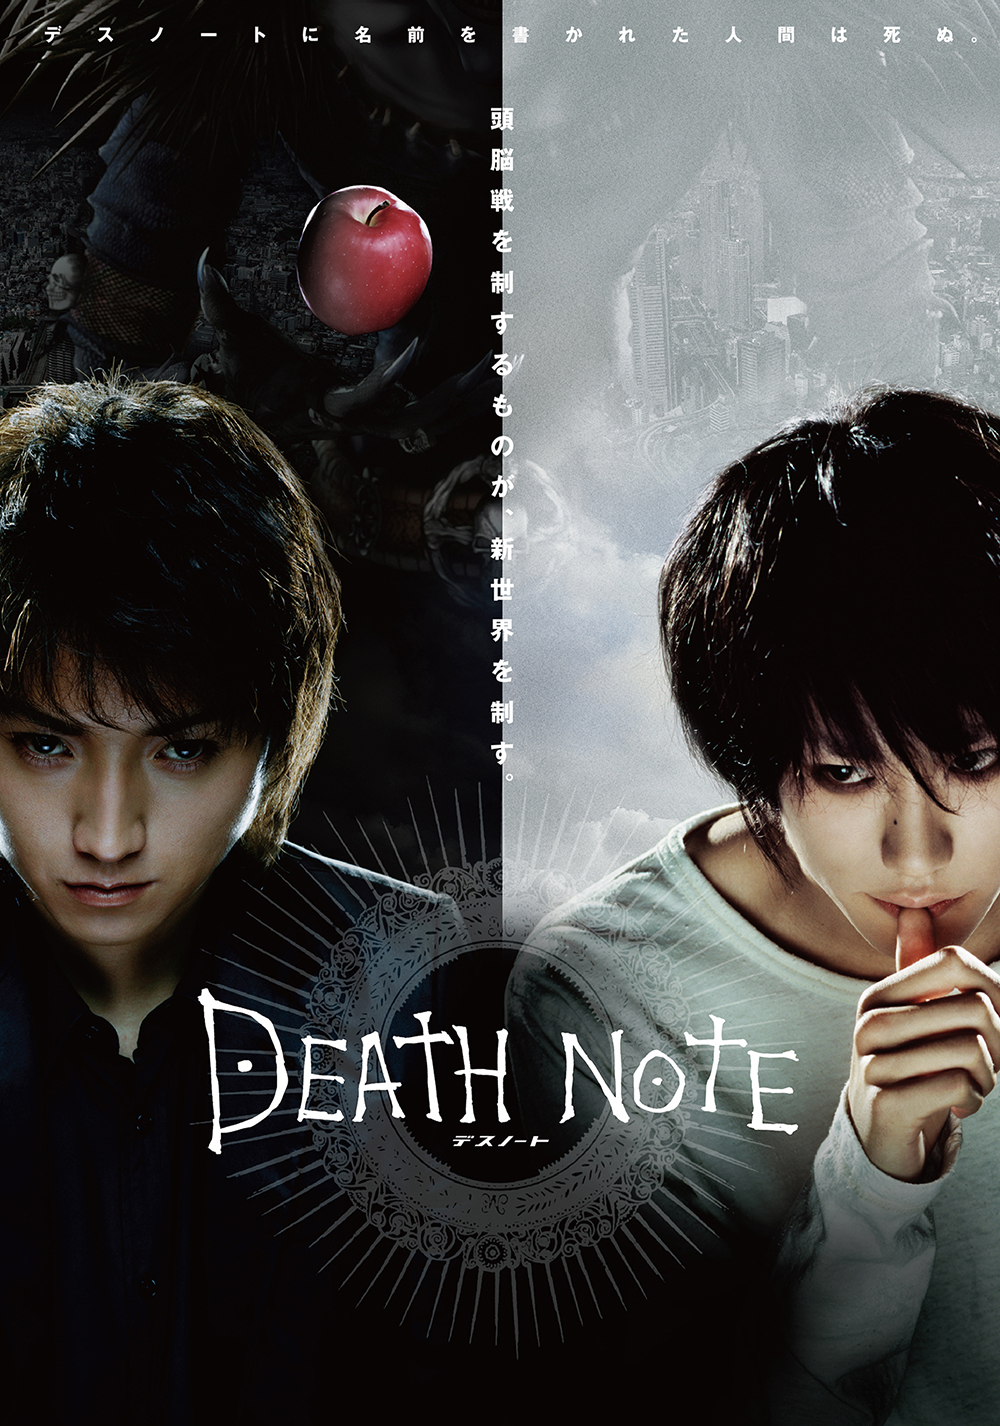 Death Note (2006 film) | Death Note Wiki | FANDOM powered by Wikia